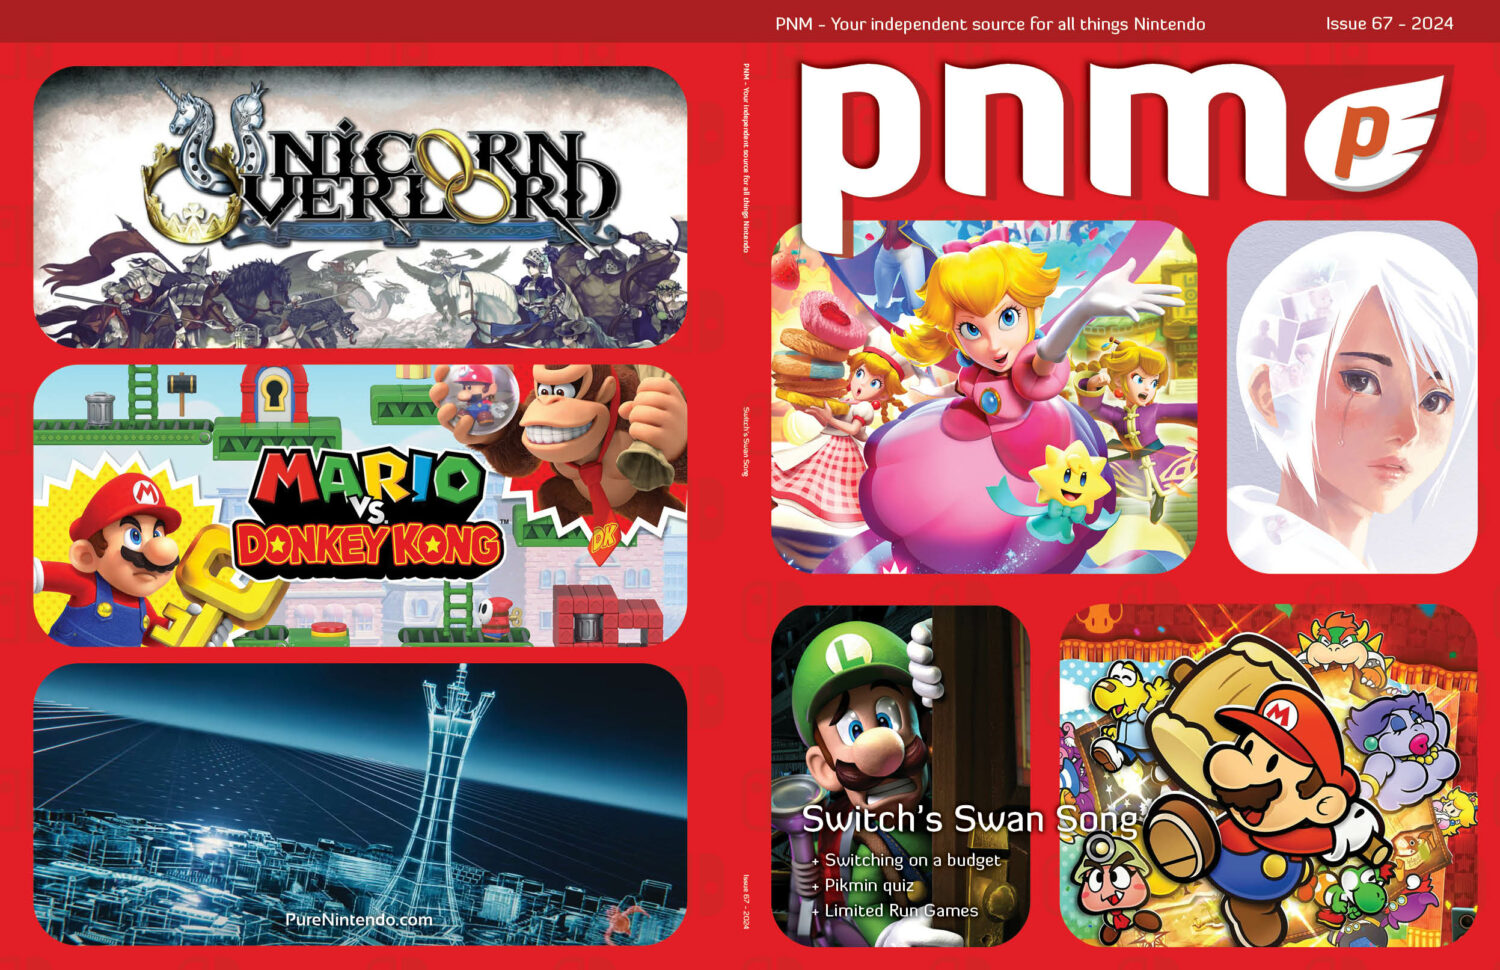 Pure Nintendo Magazine Issue 67